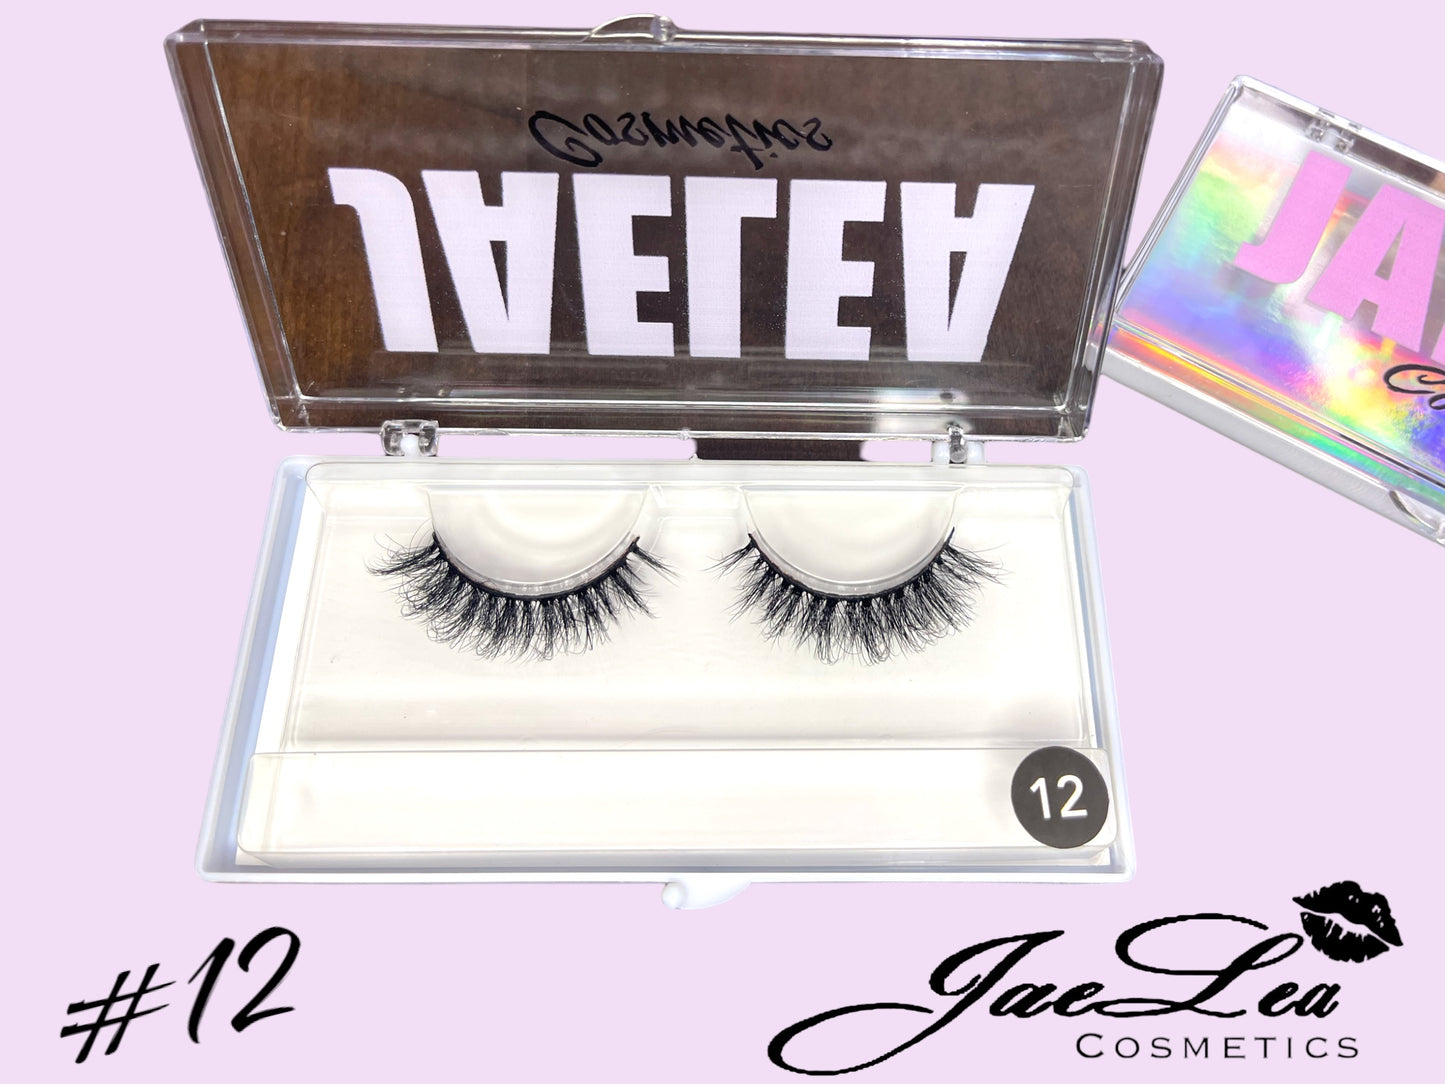 Jaelea Cosmetics lashes